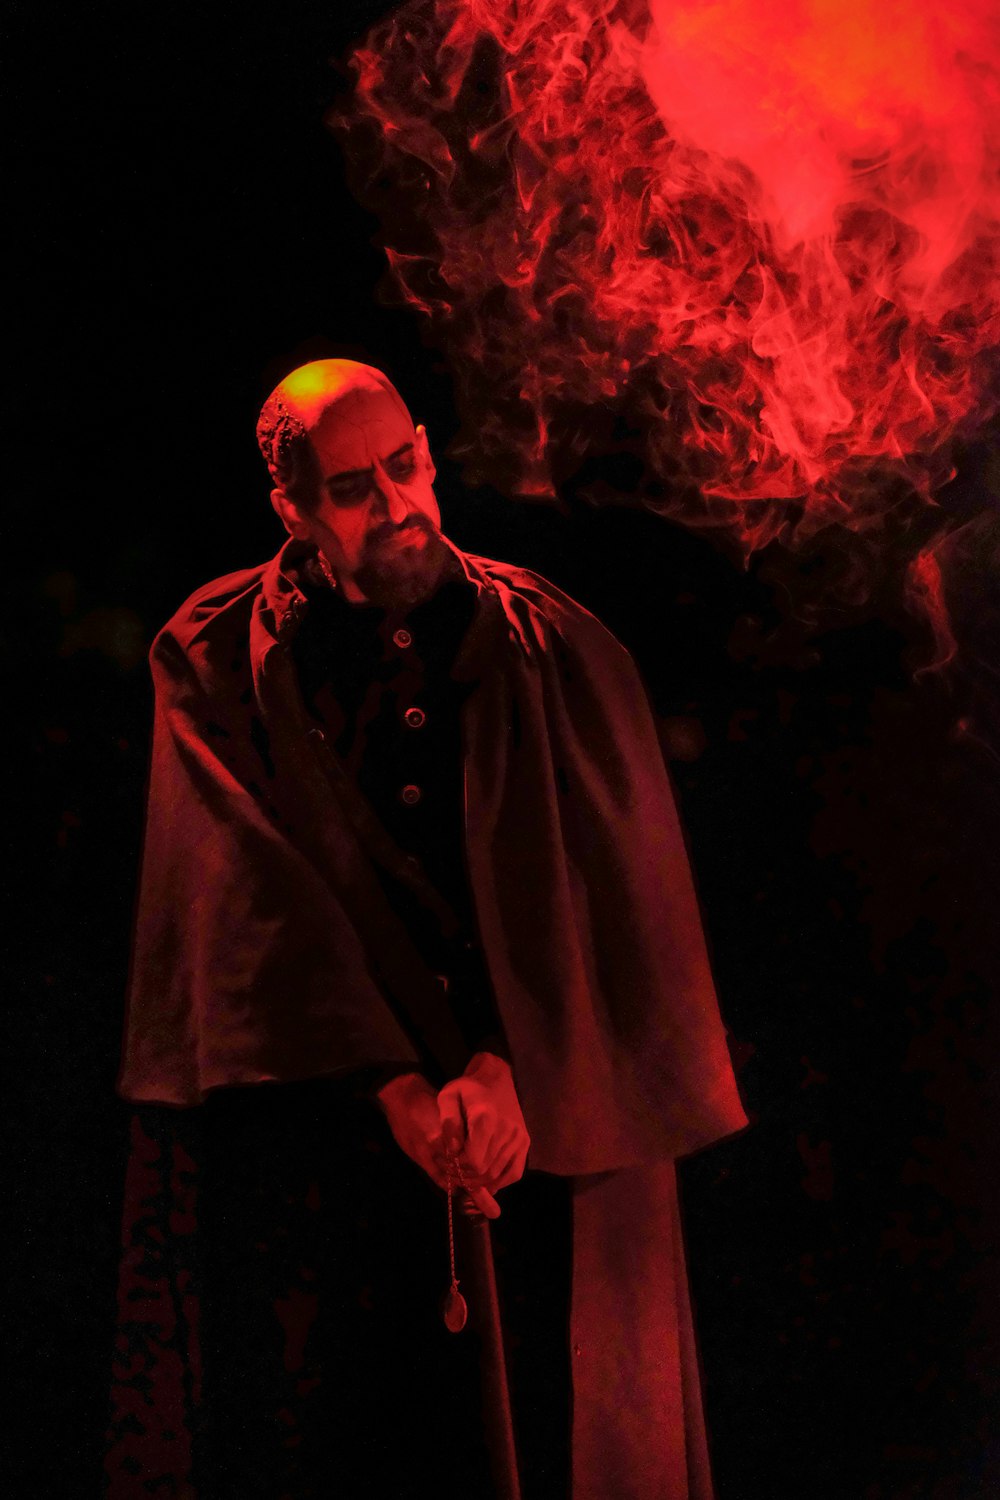 man in black coat standing near red fire